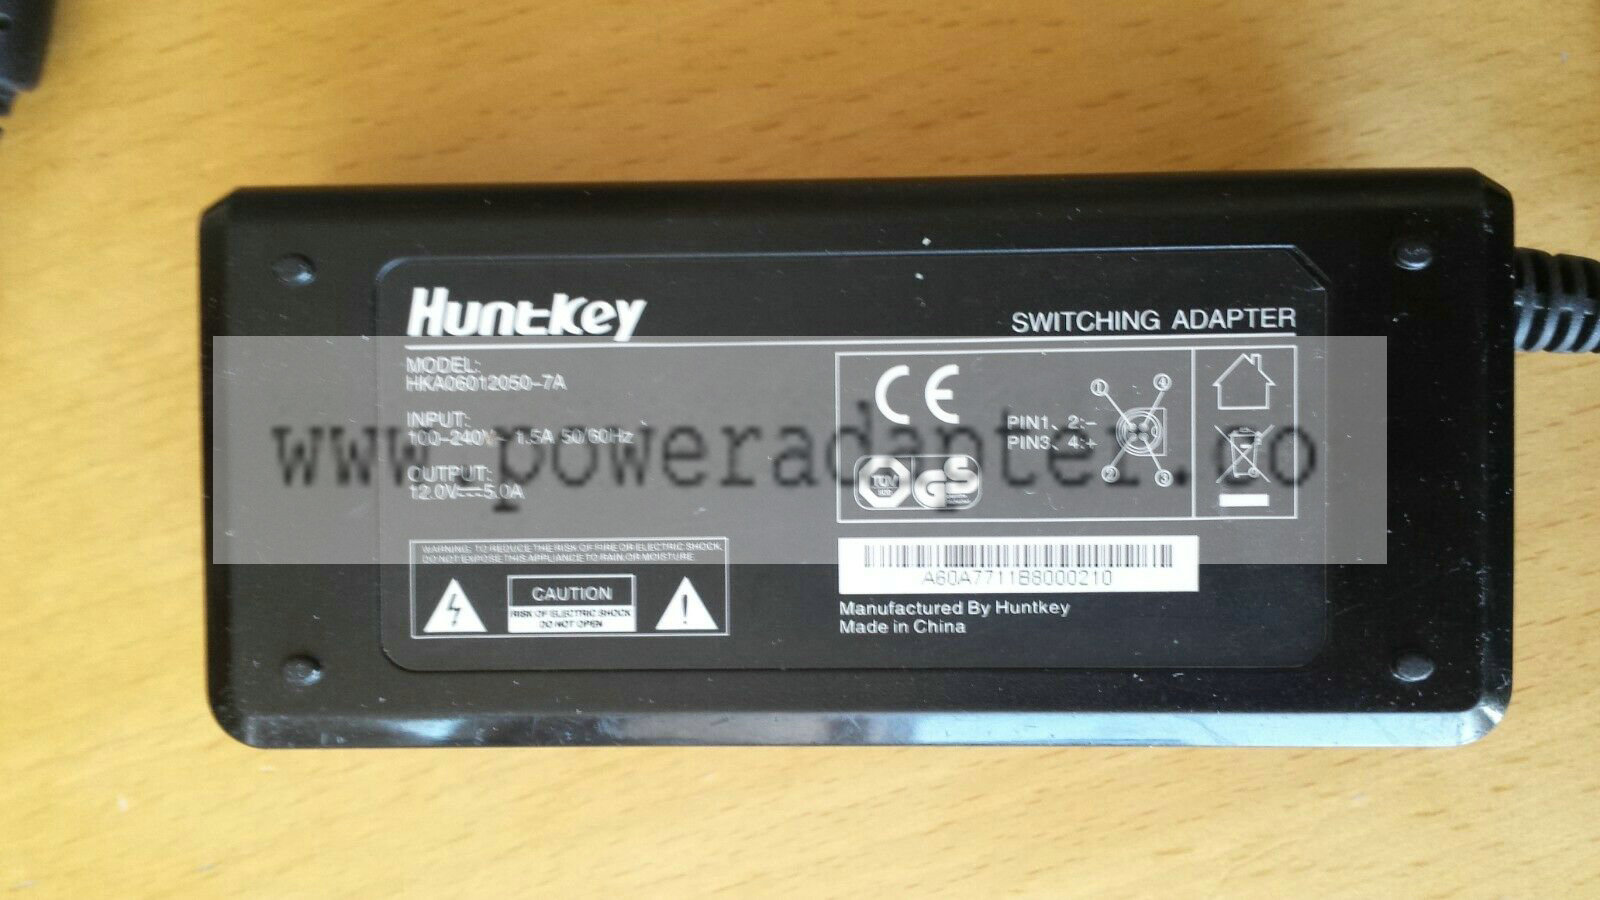 HuntKey adapter HKA06012050- 12V, 5A, 60W, 4 pin EAN: Does Not Apply Brand: HuntKey MPN: HKA06012050-7A Output Vo